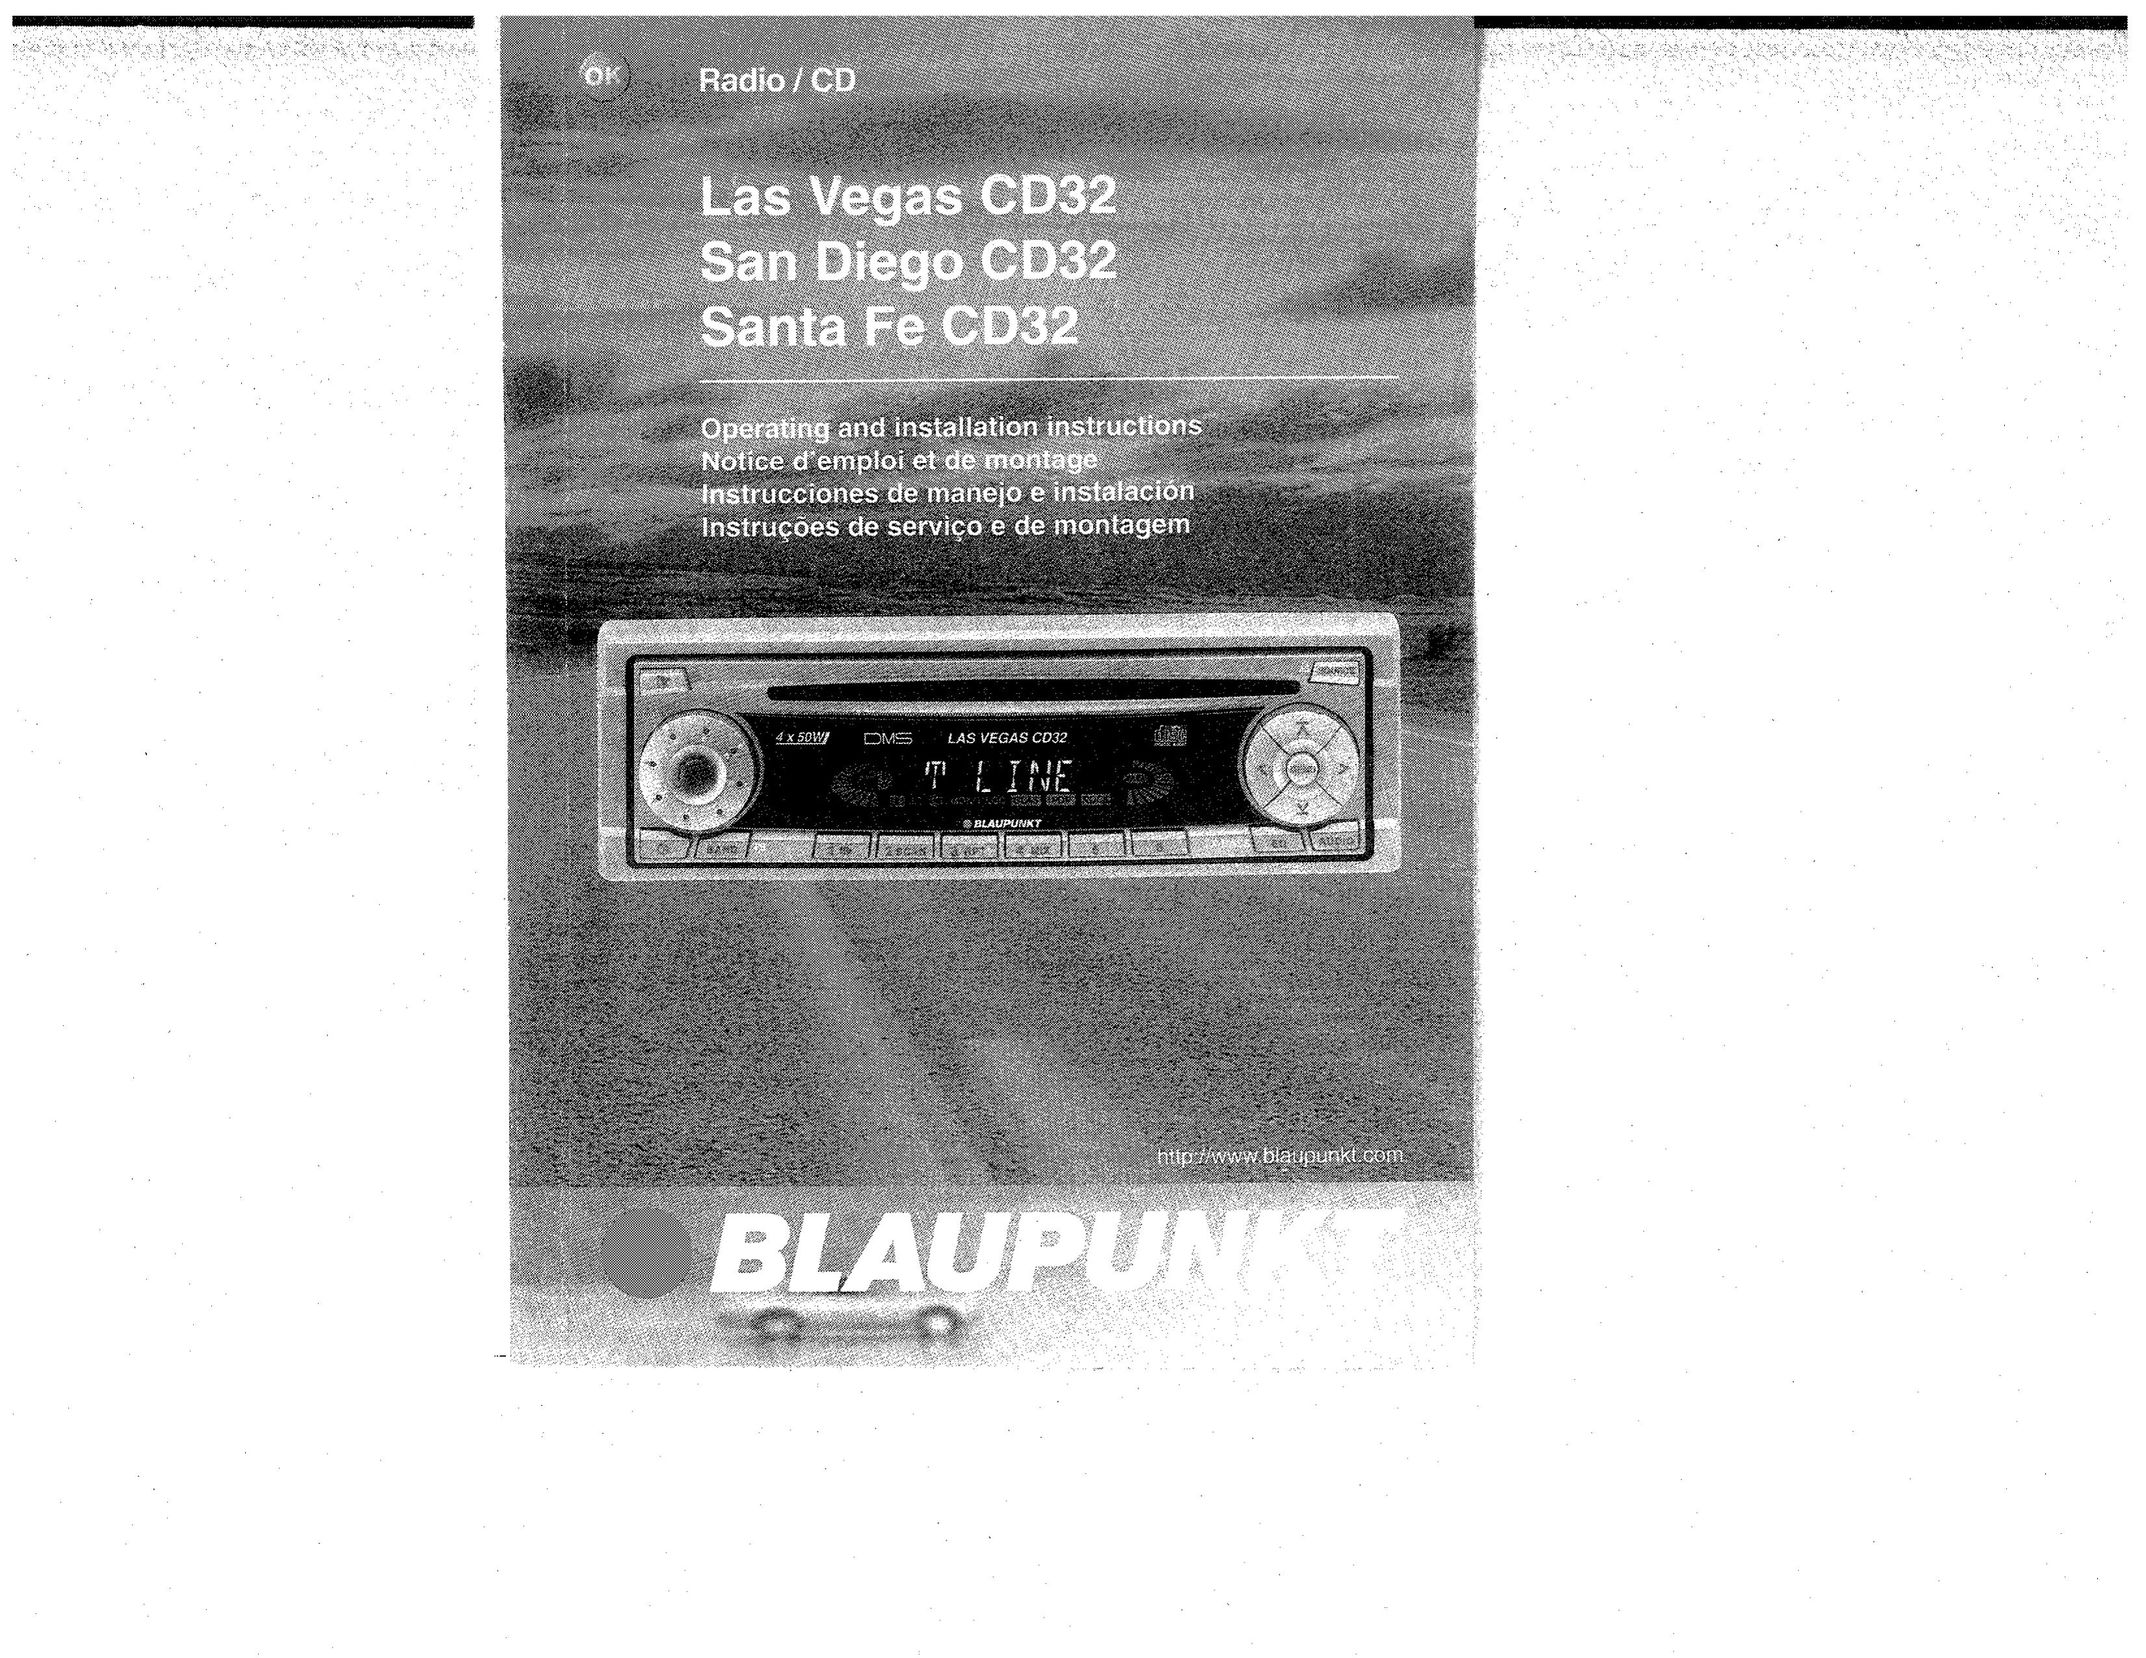 Yamaha Santa Fe CD32 Car Stereo System User Manual